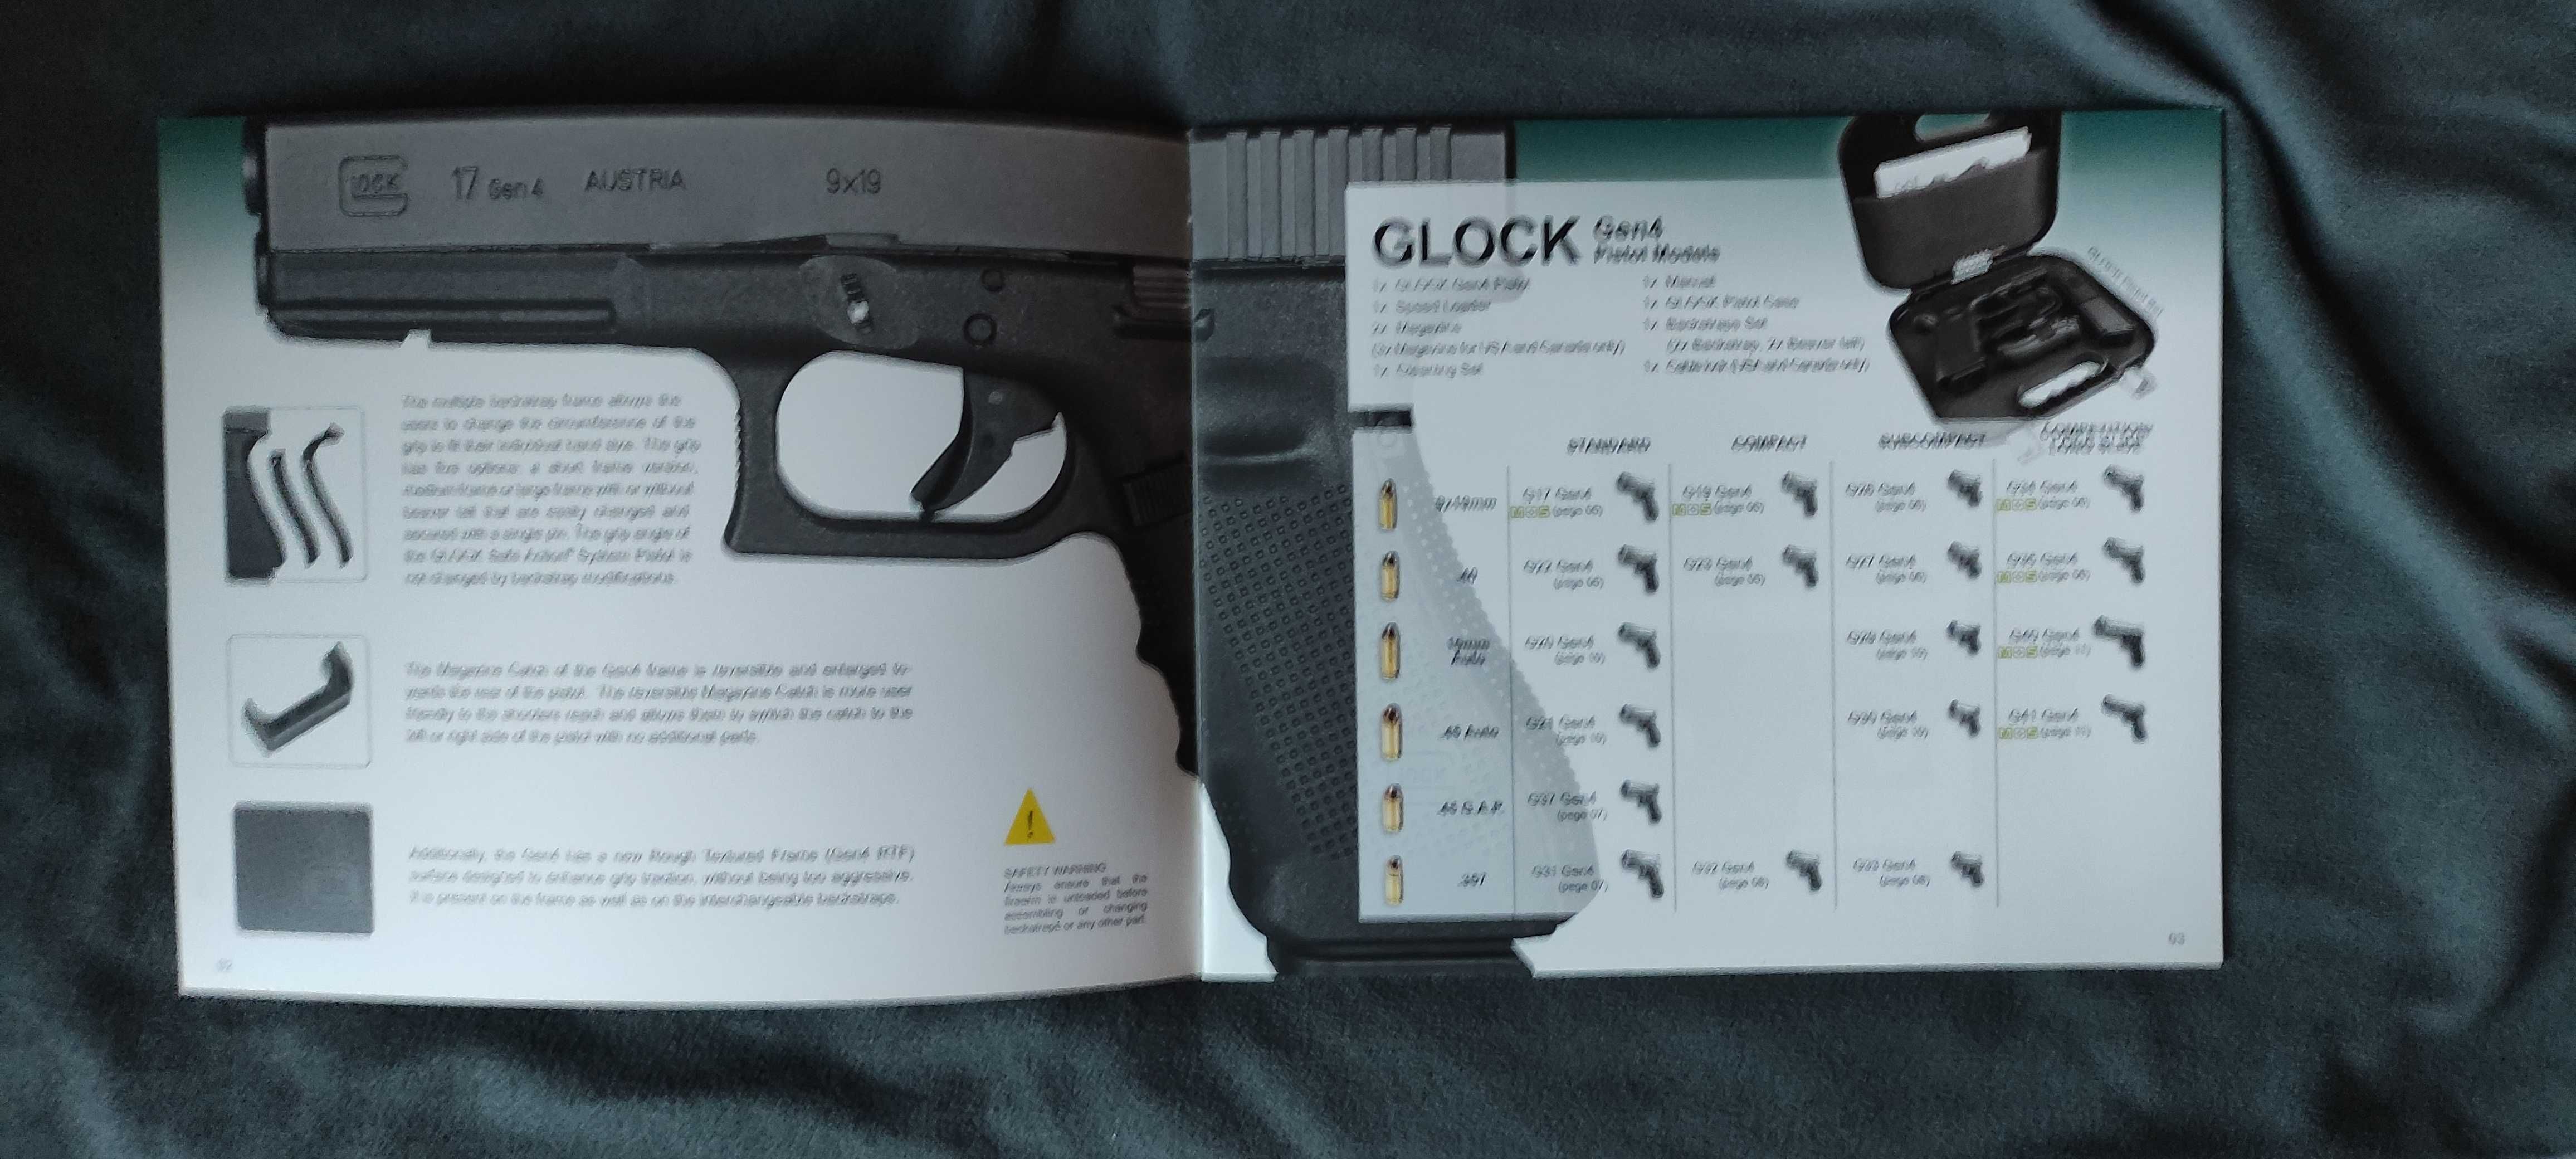 Prospekt Glock 2016